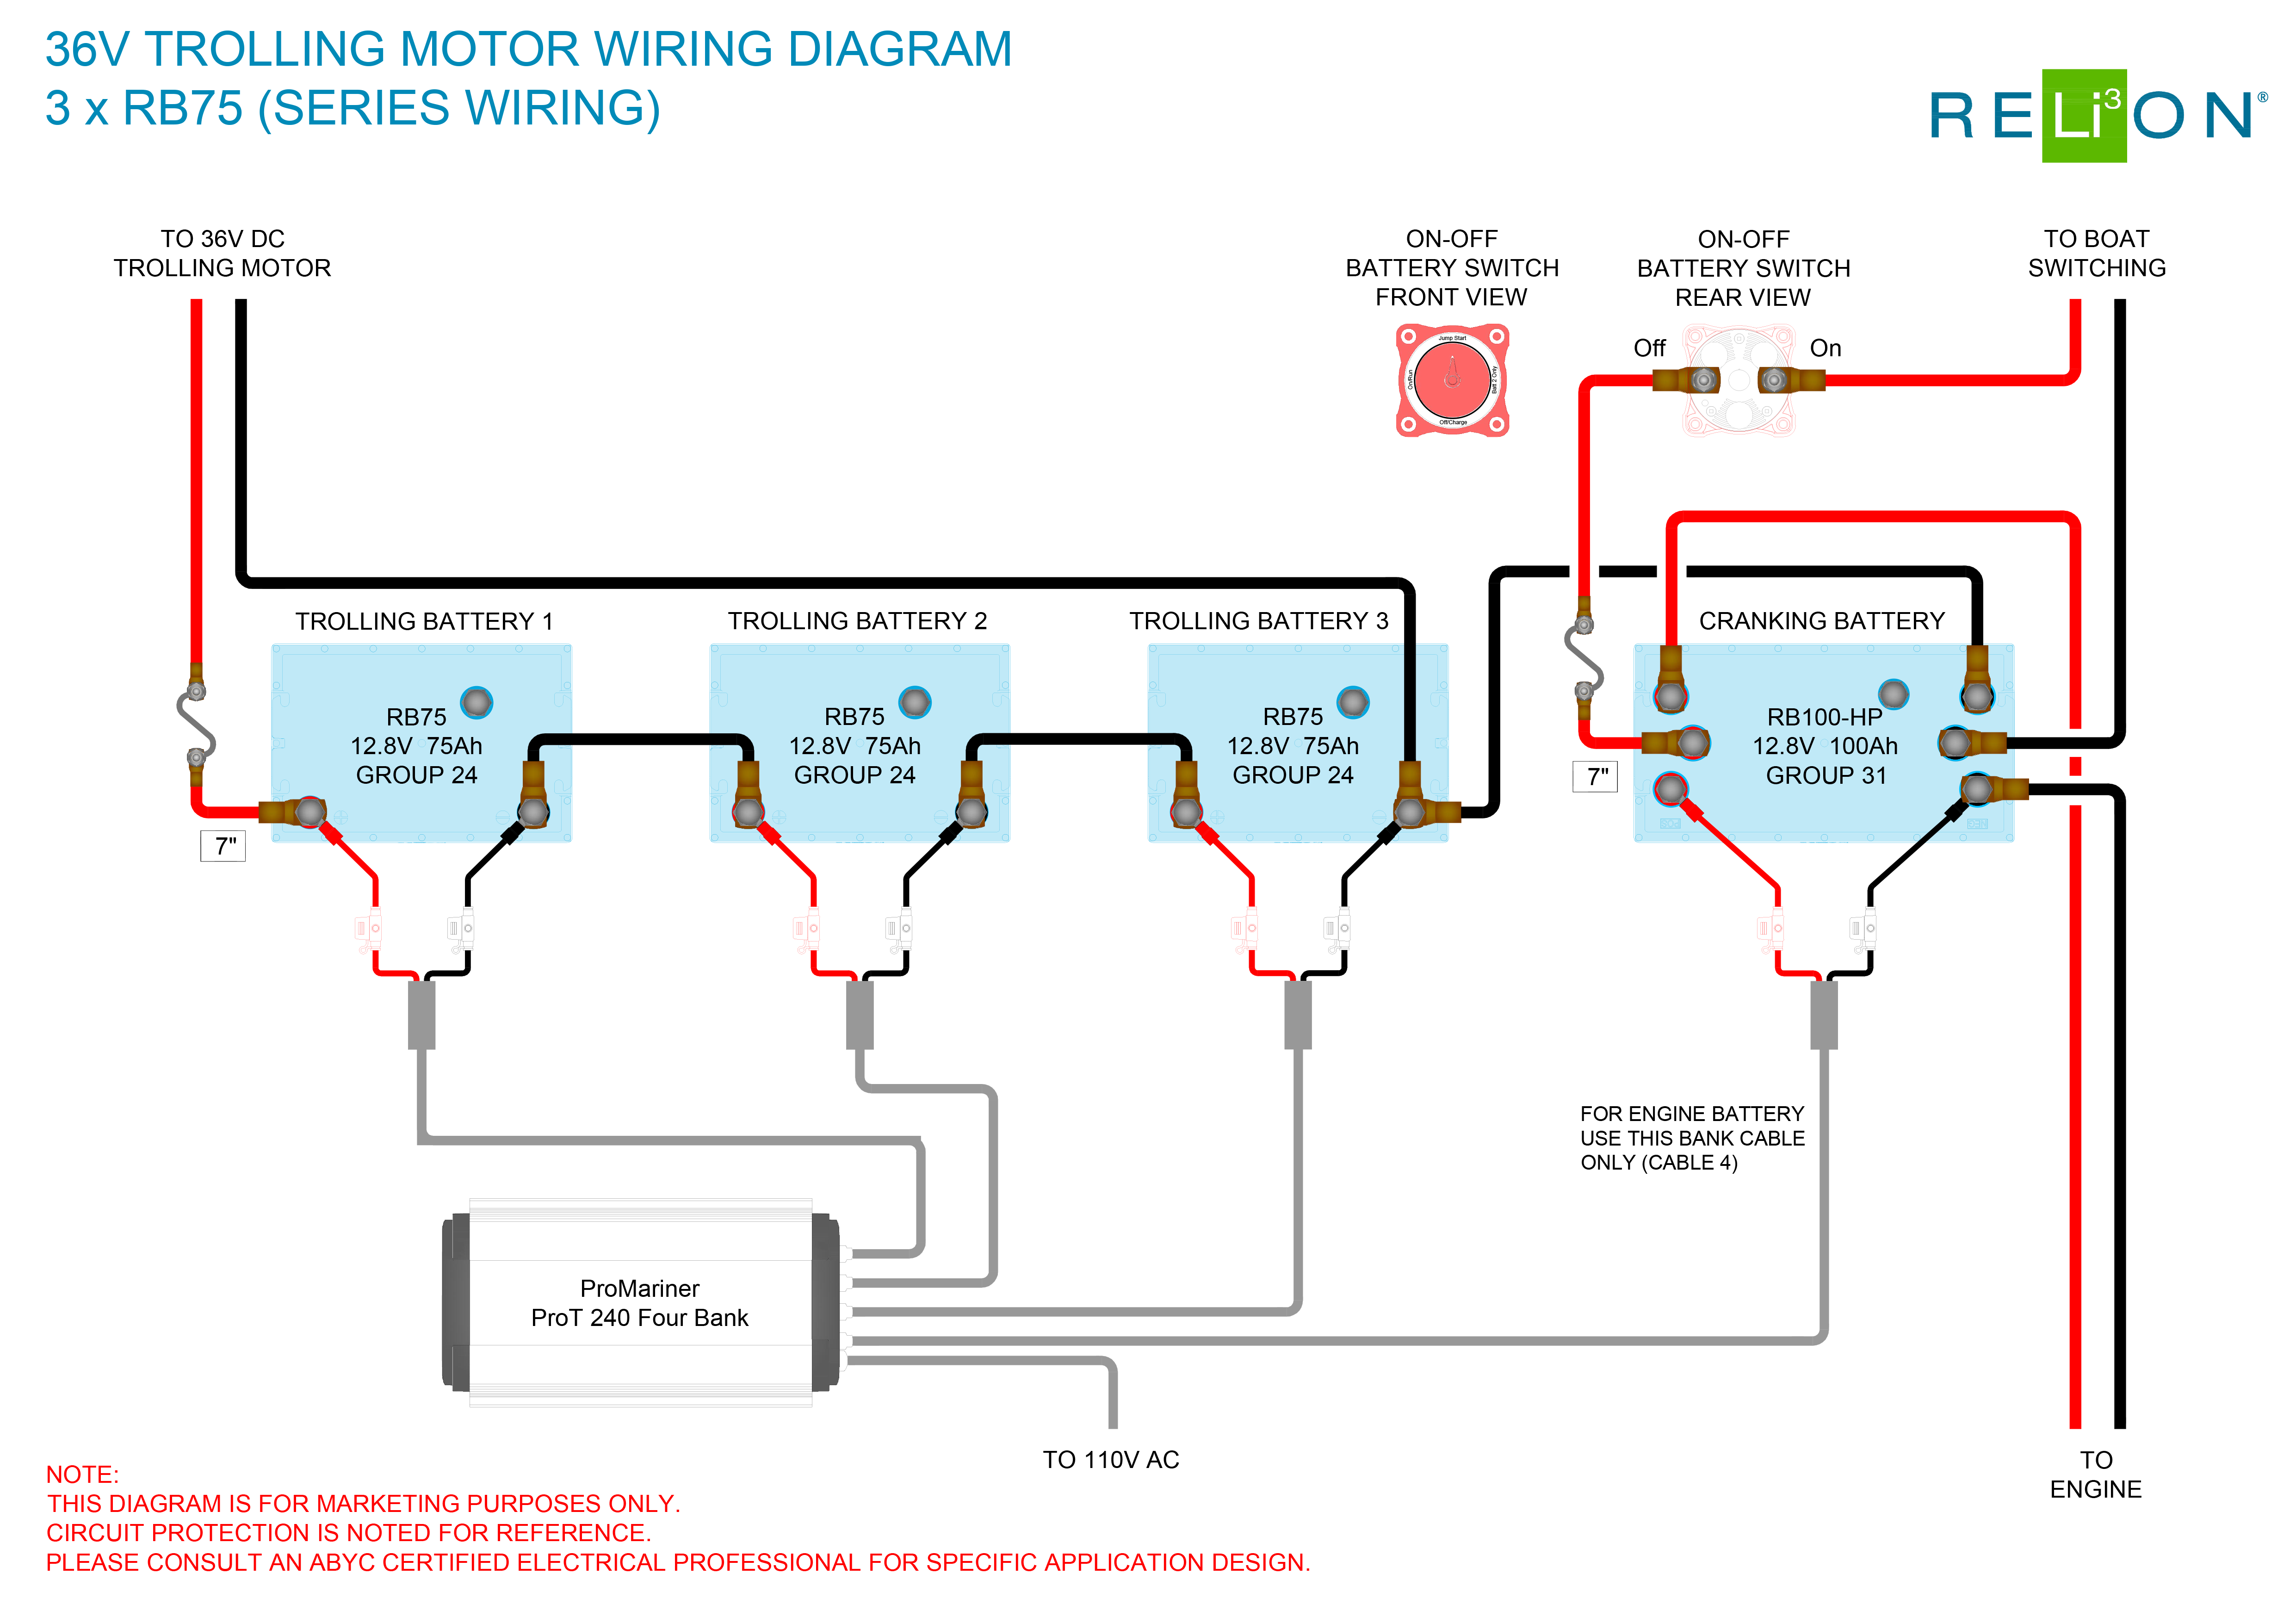 36V Trolling Motor Series Wiring